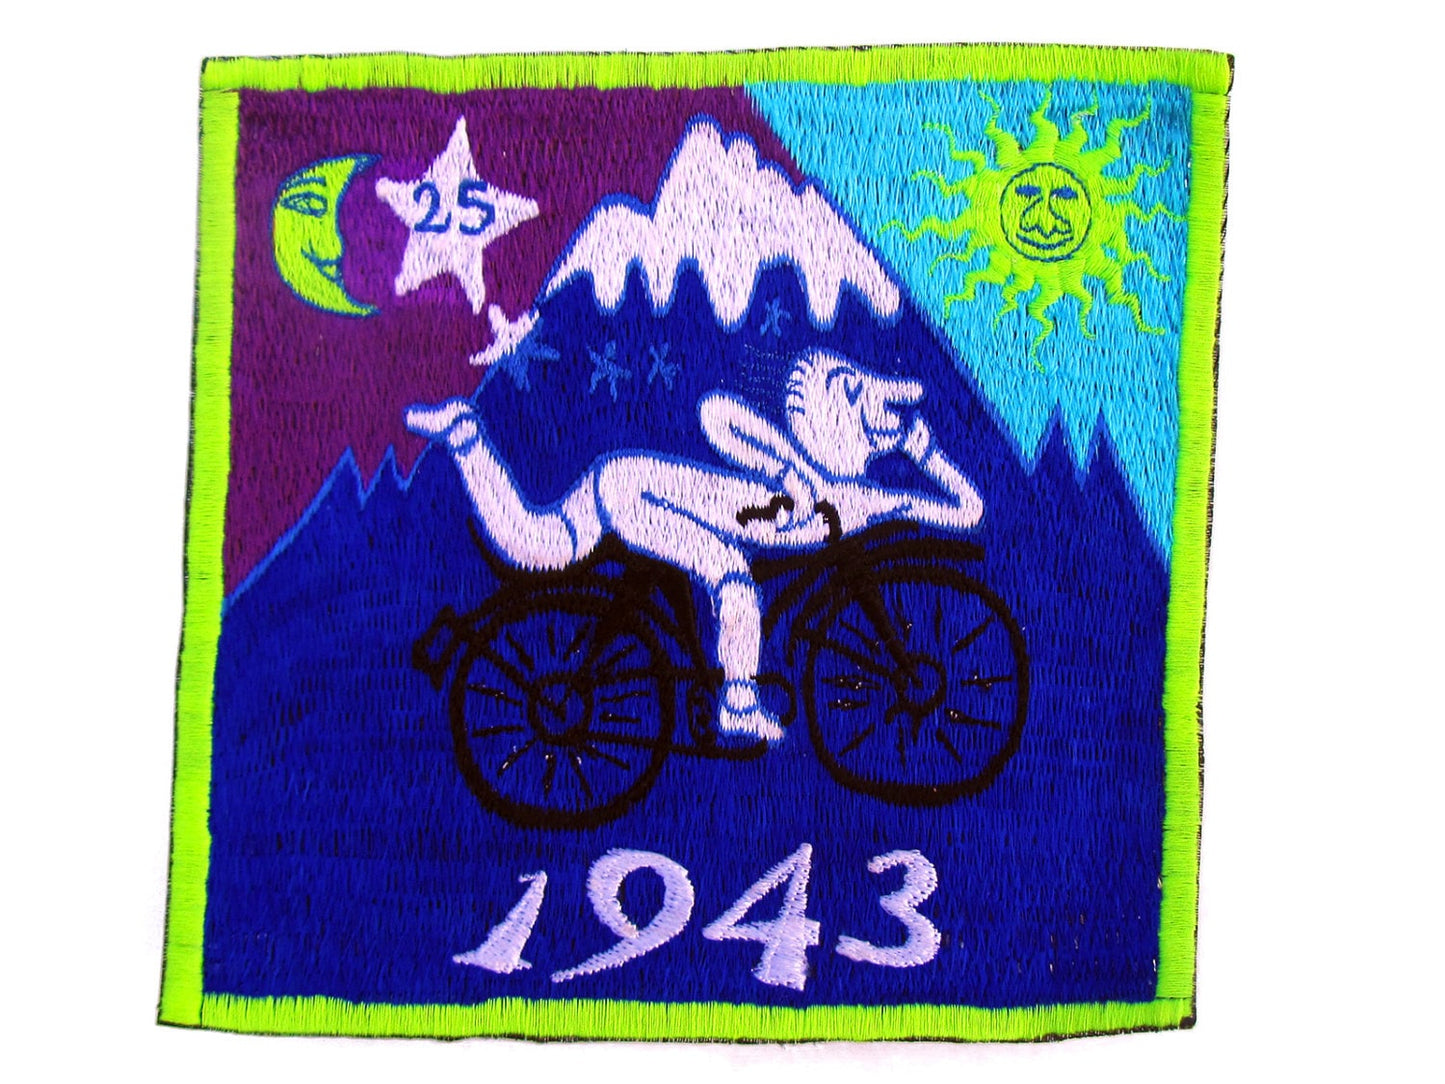 Blue Bicycle Day blacklight LSD Cult medium Patch Albert Hofmann 1943 Psychedelic  Hippie Visionary Drug Cosmic Healing Medicine